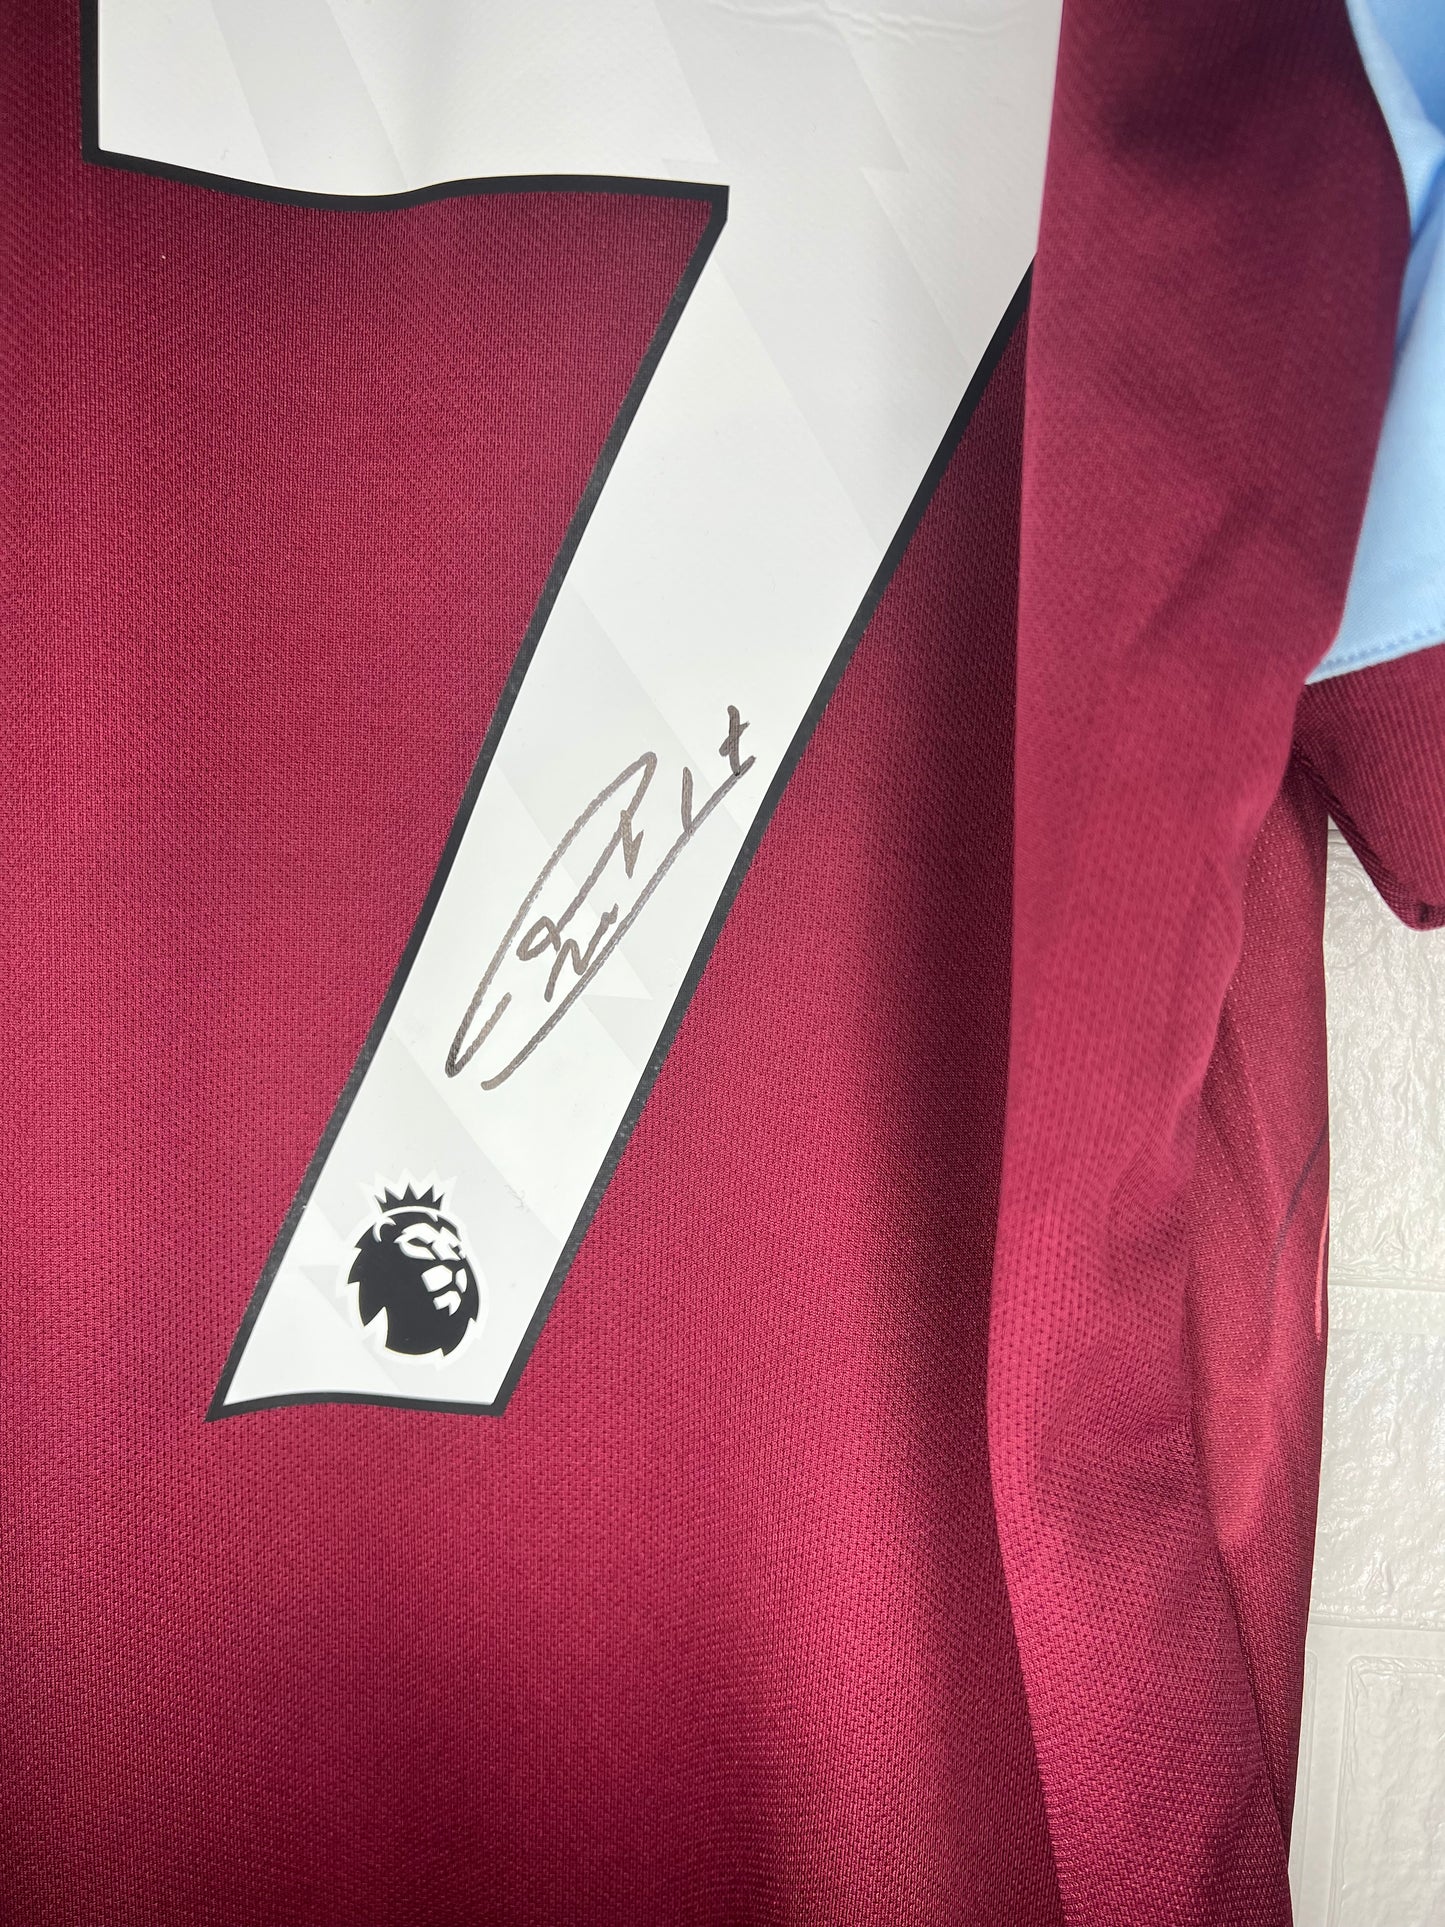 Cornet signed West Ham shirt